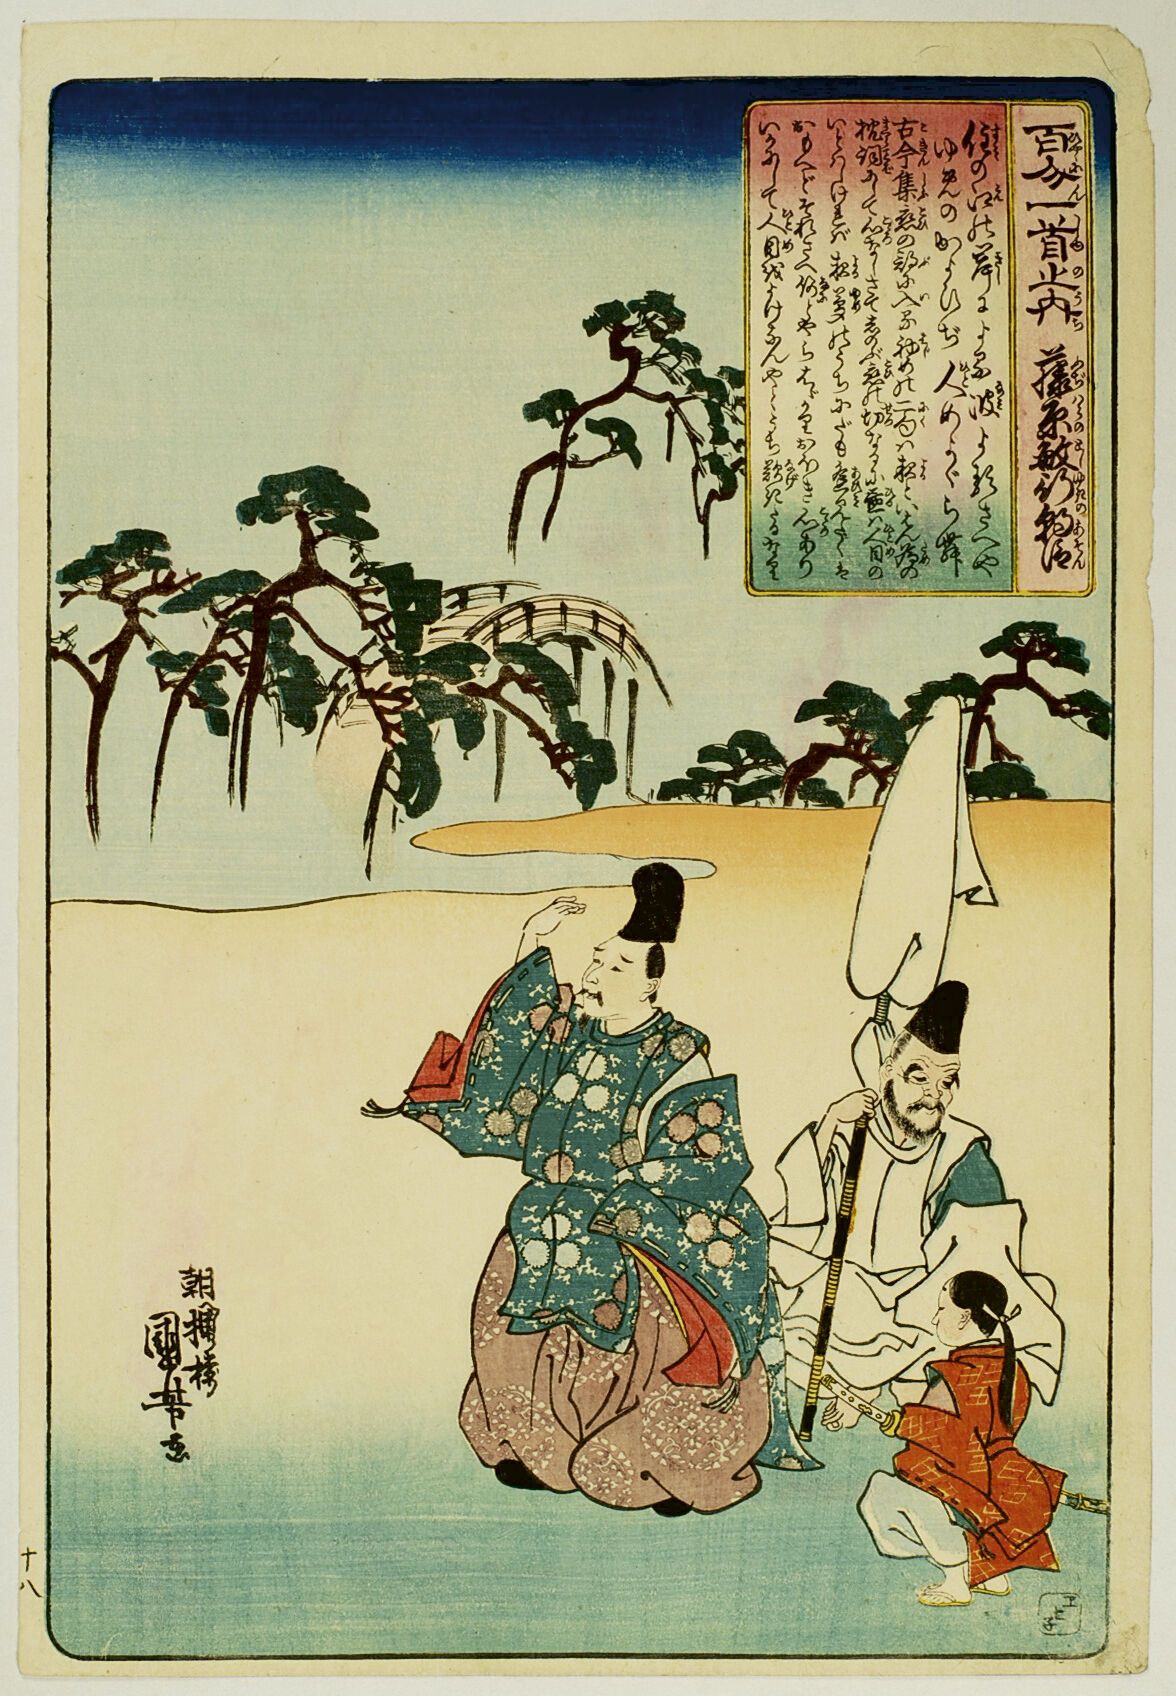 Null 宇多川国义 (1797-1861)
百人一首》系列中的 "大板"（Oban tate-e），版式为藤原敏之，诗人在一页纸和一个侍者的陪同下观看住吉寺的&hellip;